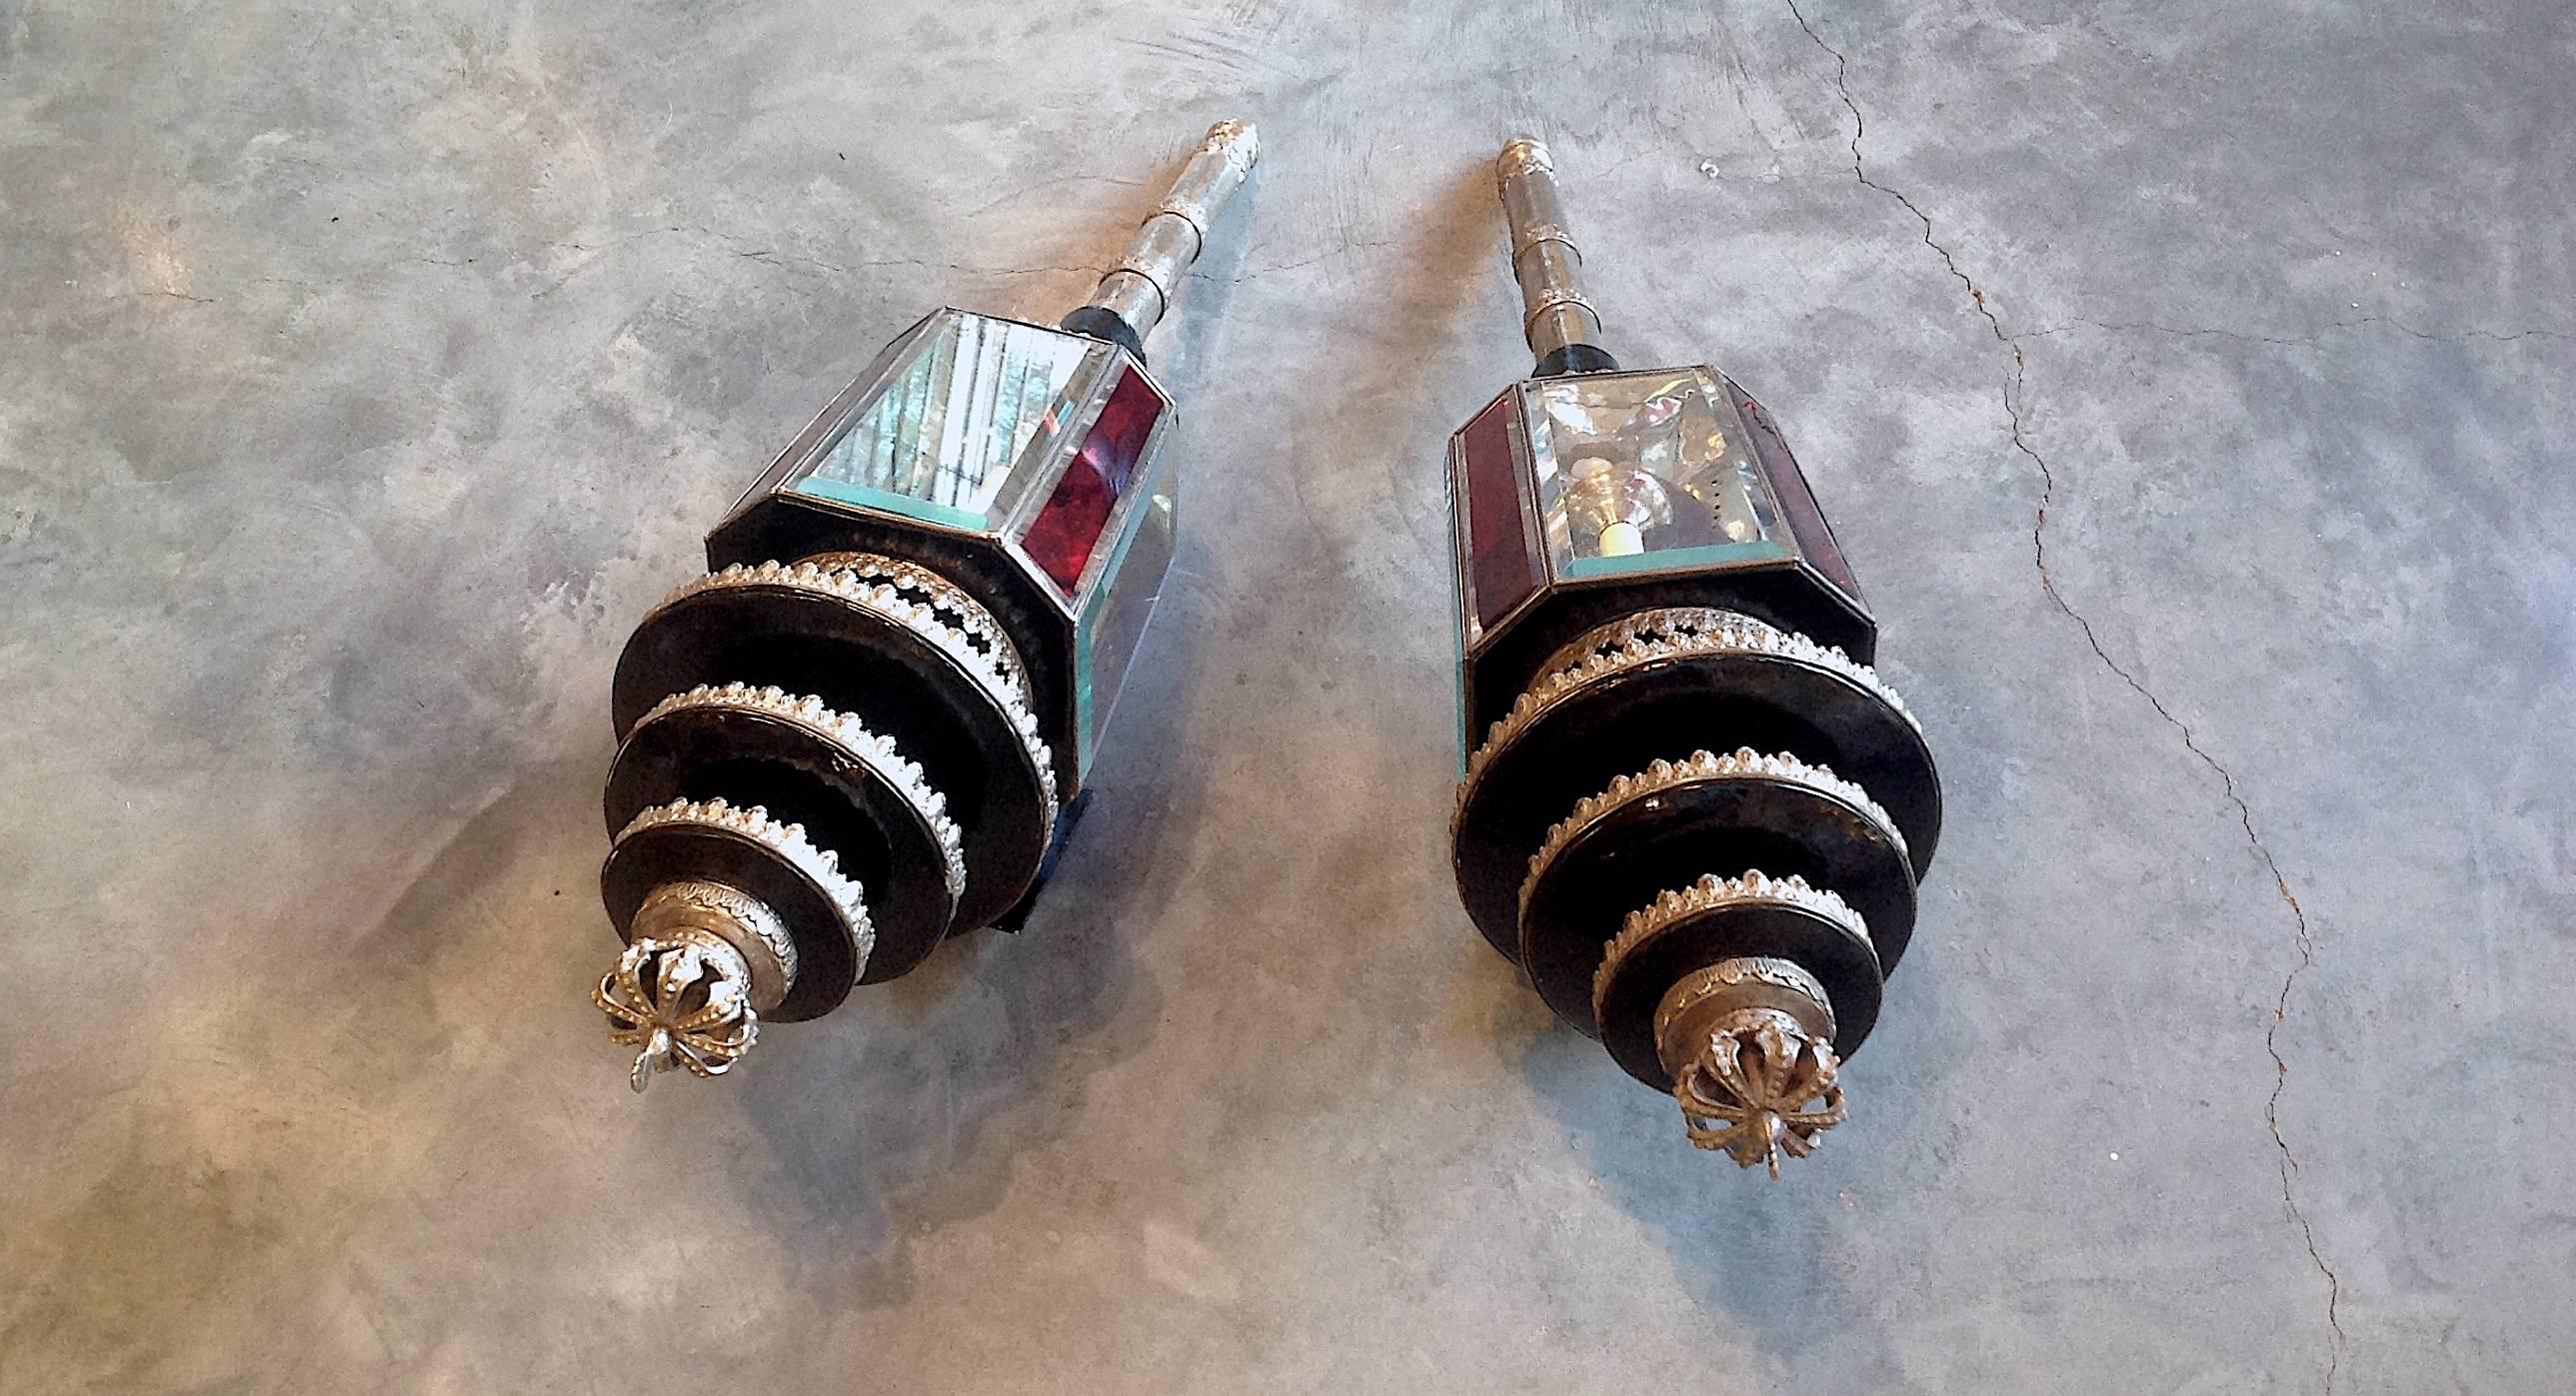 Renaissance Pair of Early 1800s European Royal Coach Lanterns For Sale